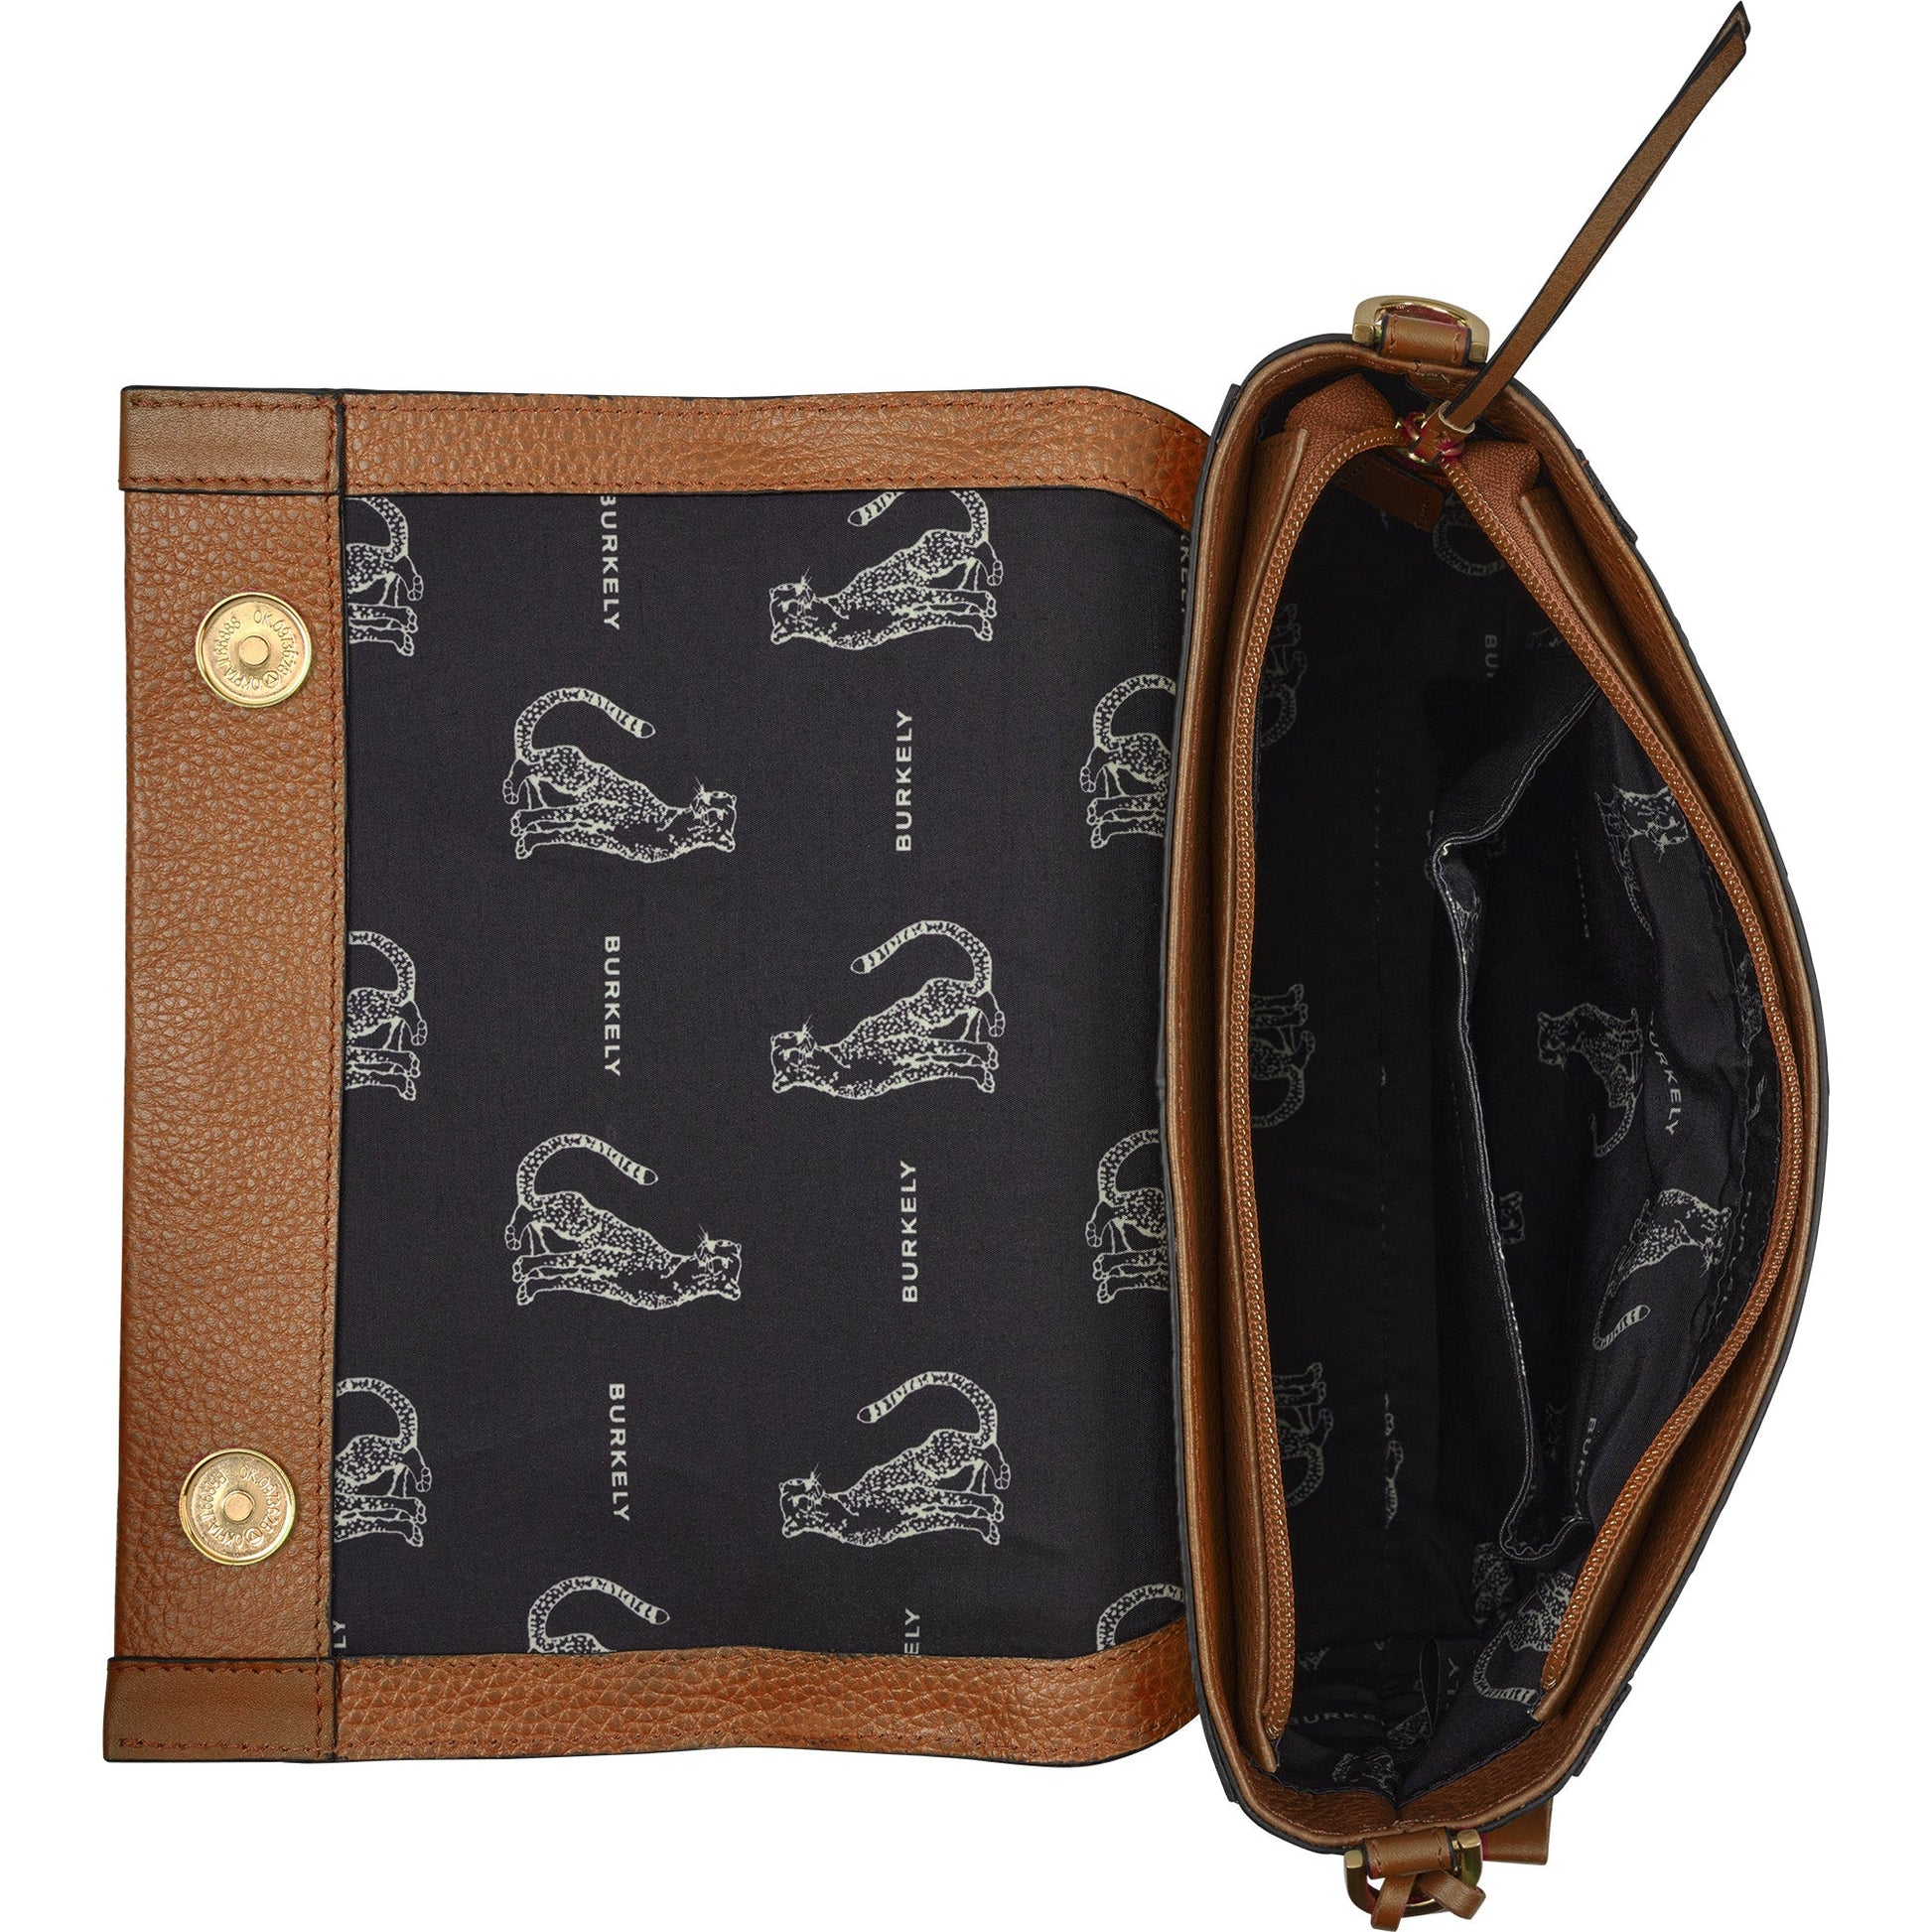 Handtasche Keen Keira 1000625.41 von Burkely - Laure Bags and Travel